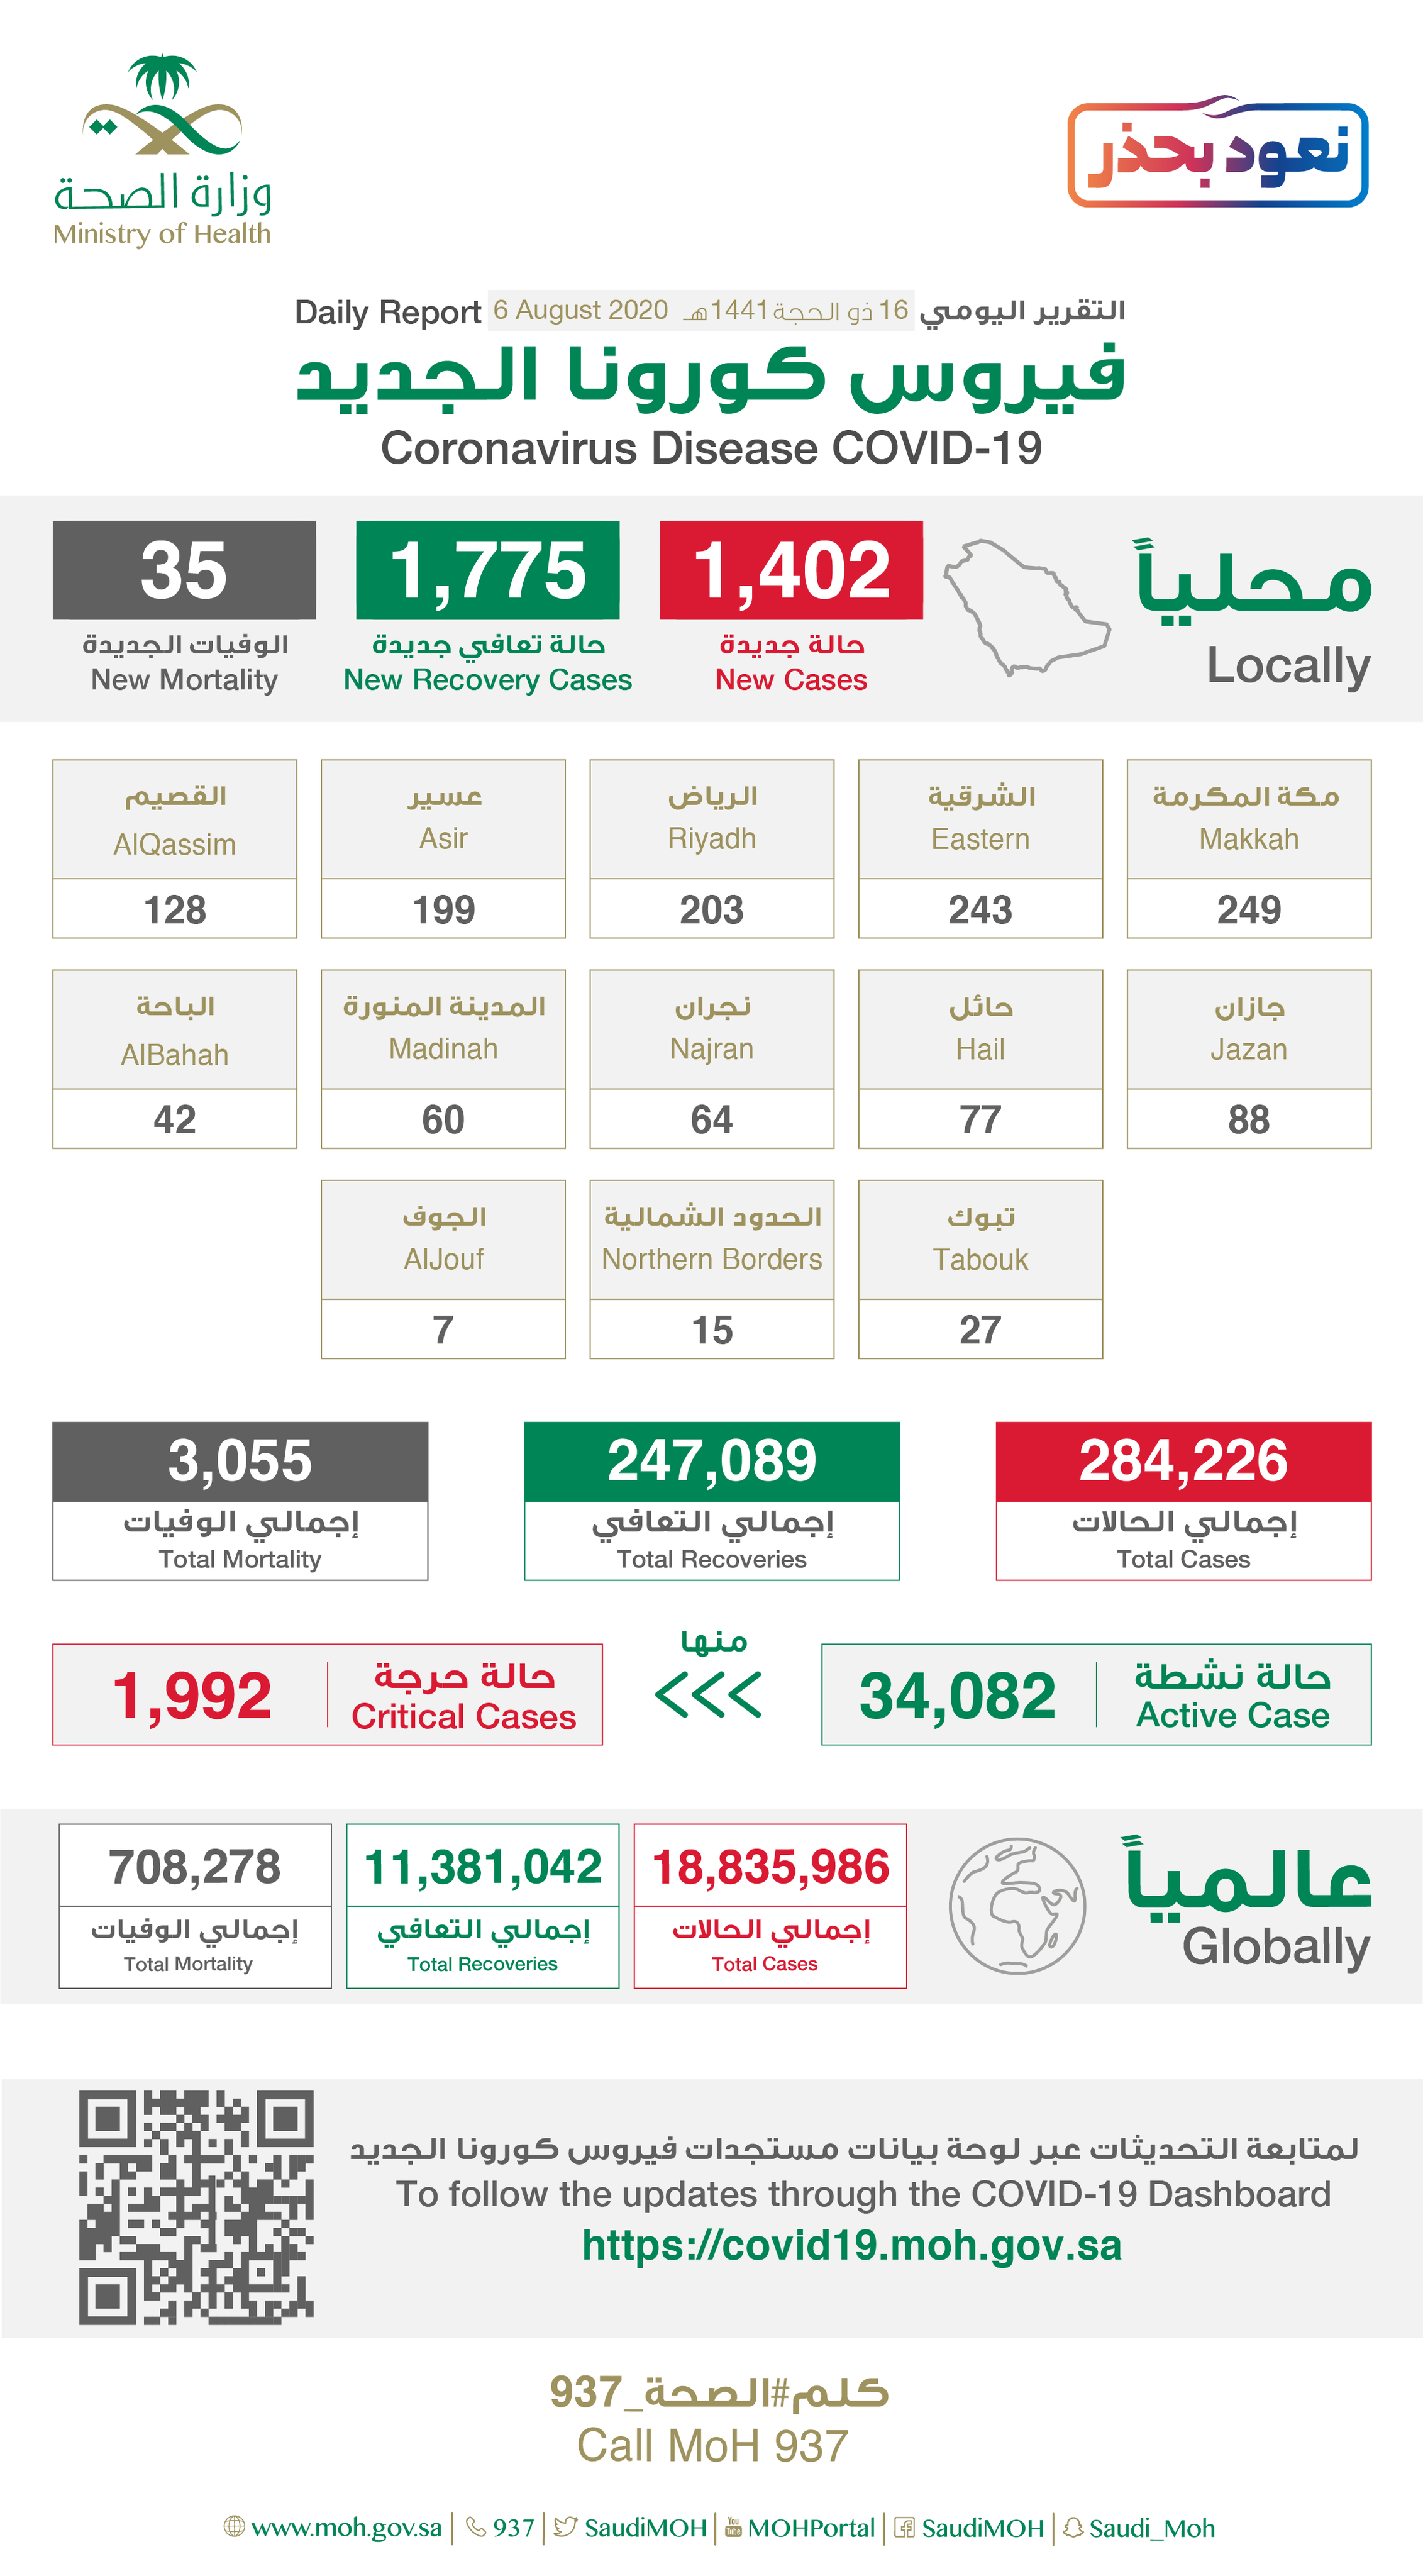 Saudi Arabia Coronavirus : Total Cases :284,226, New Cases : 1,402, Cured : 247,089 , Deaths: 3,055, Active Cases : 34,082